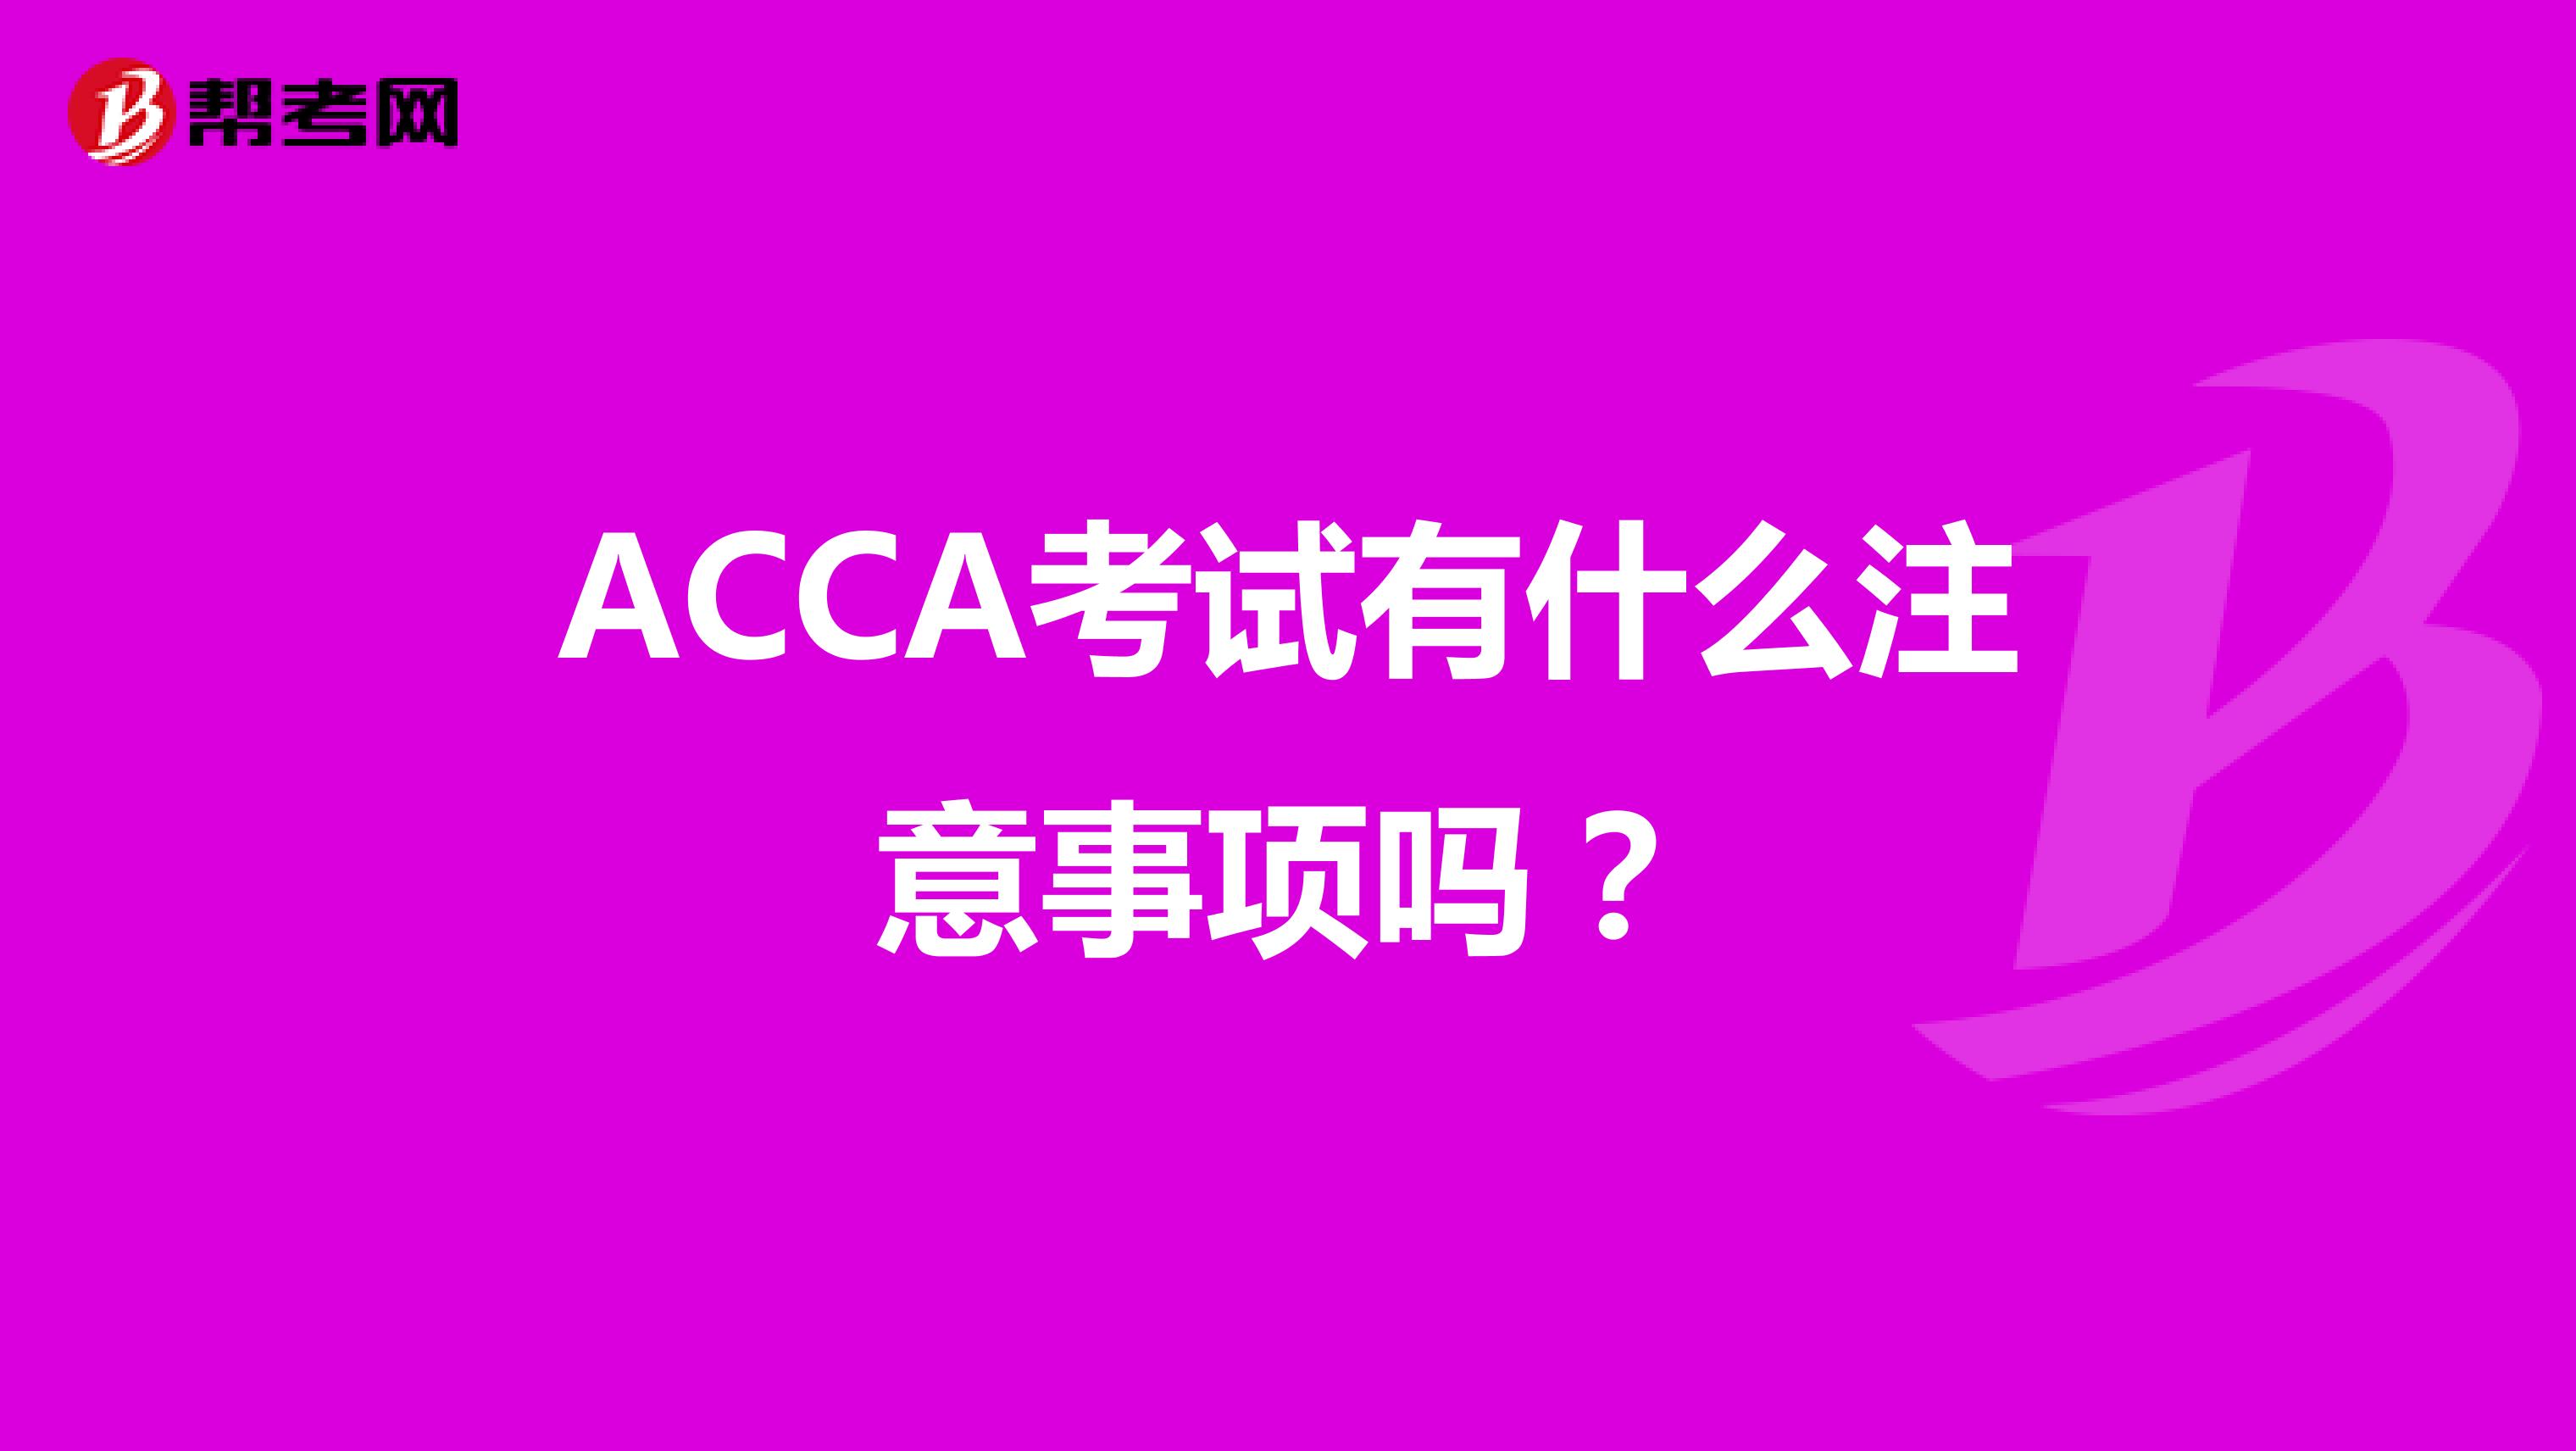 ACCA考试有什么注意事项吗？